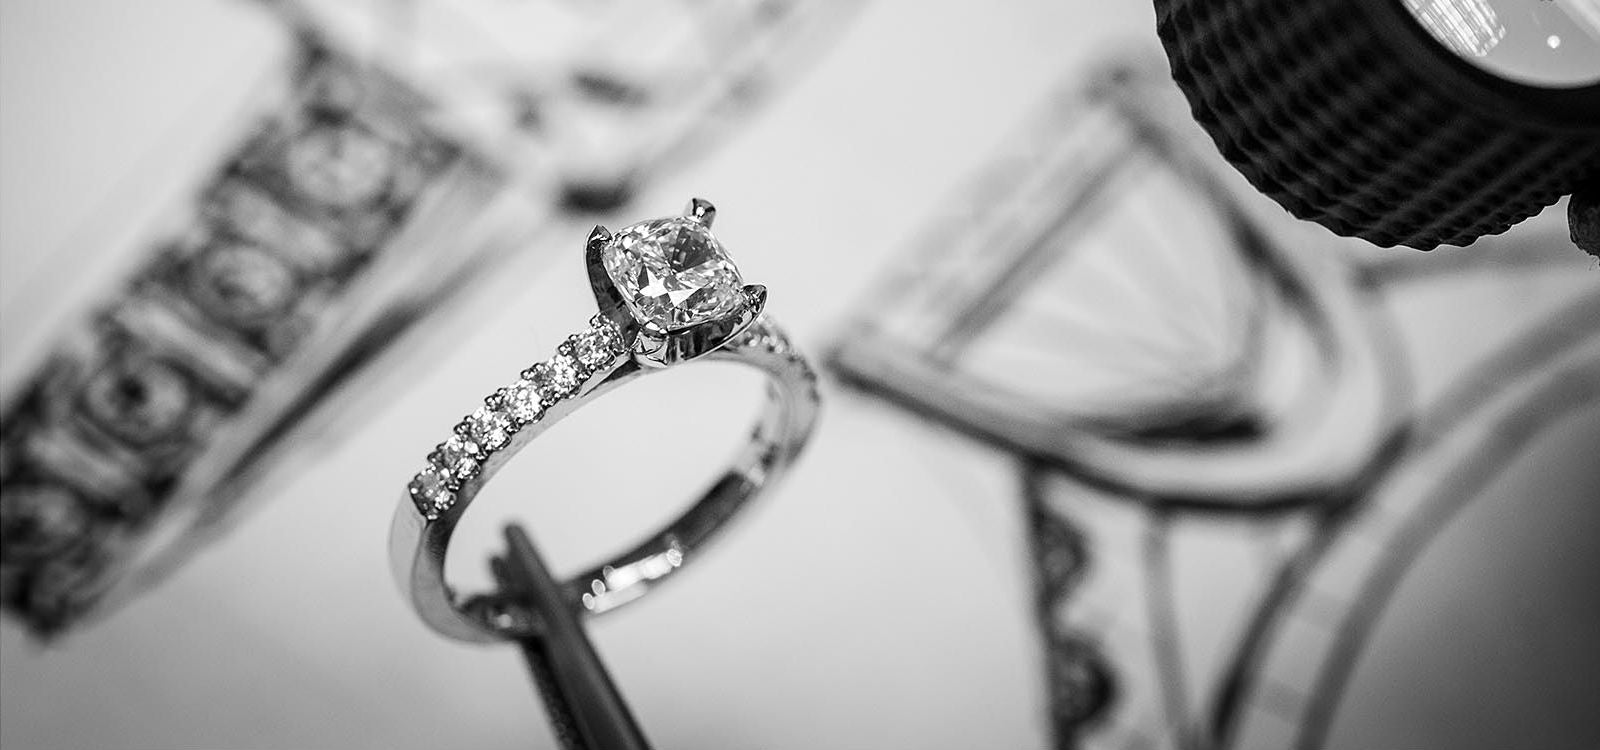 Bespoke engagement ring, custom made in Hatton Garden London